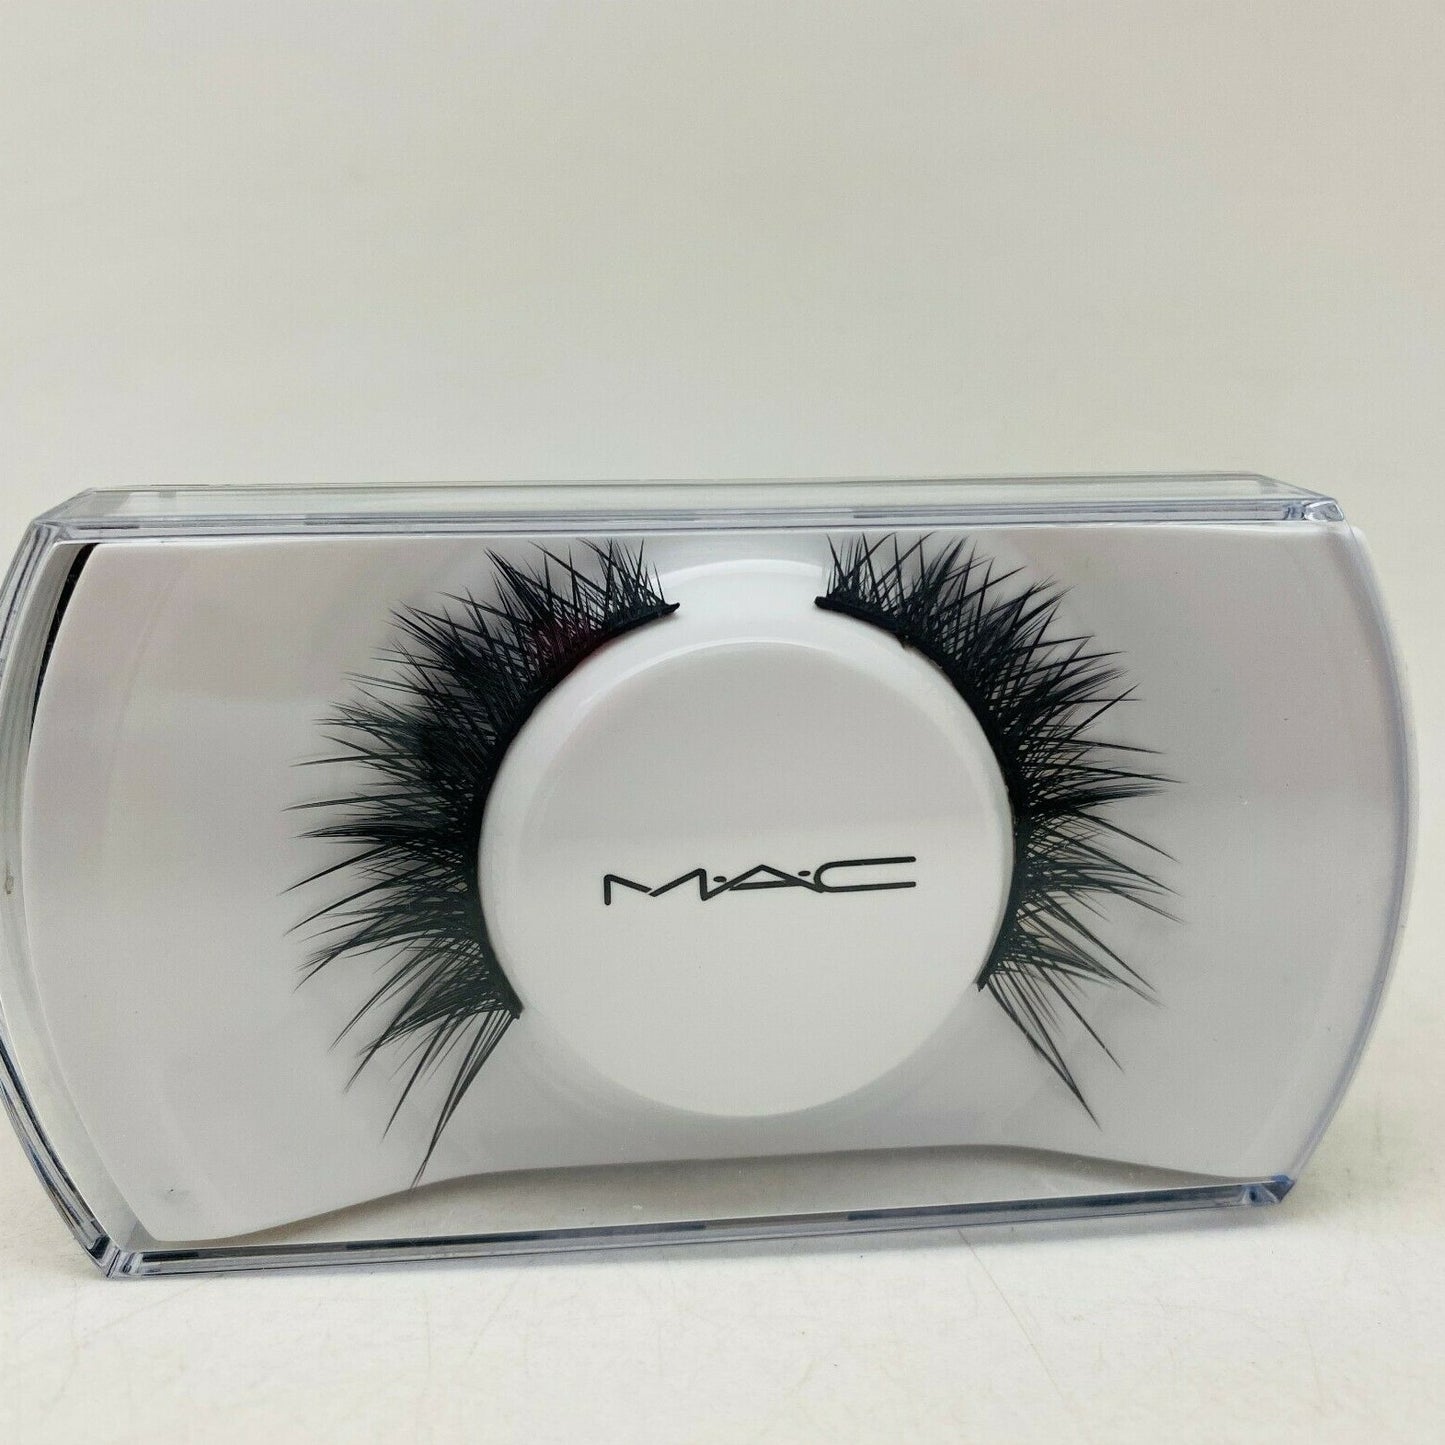 Mac Makeup eyelashes in Seductress lash